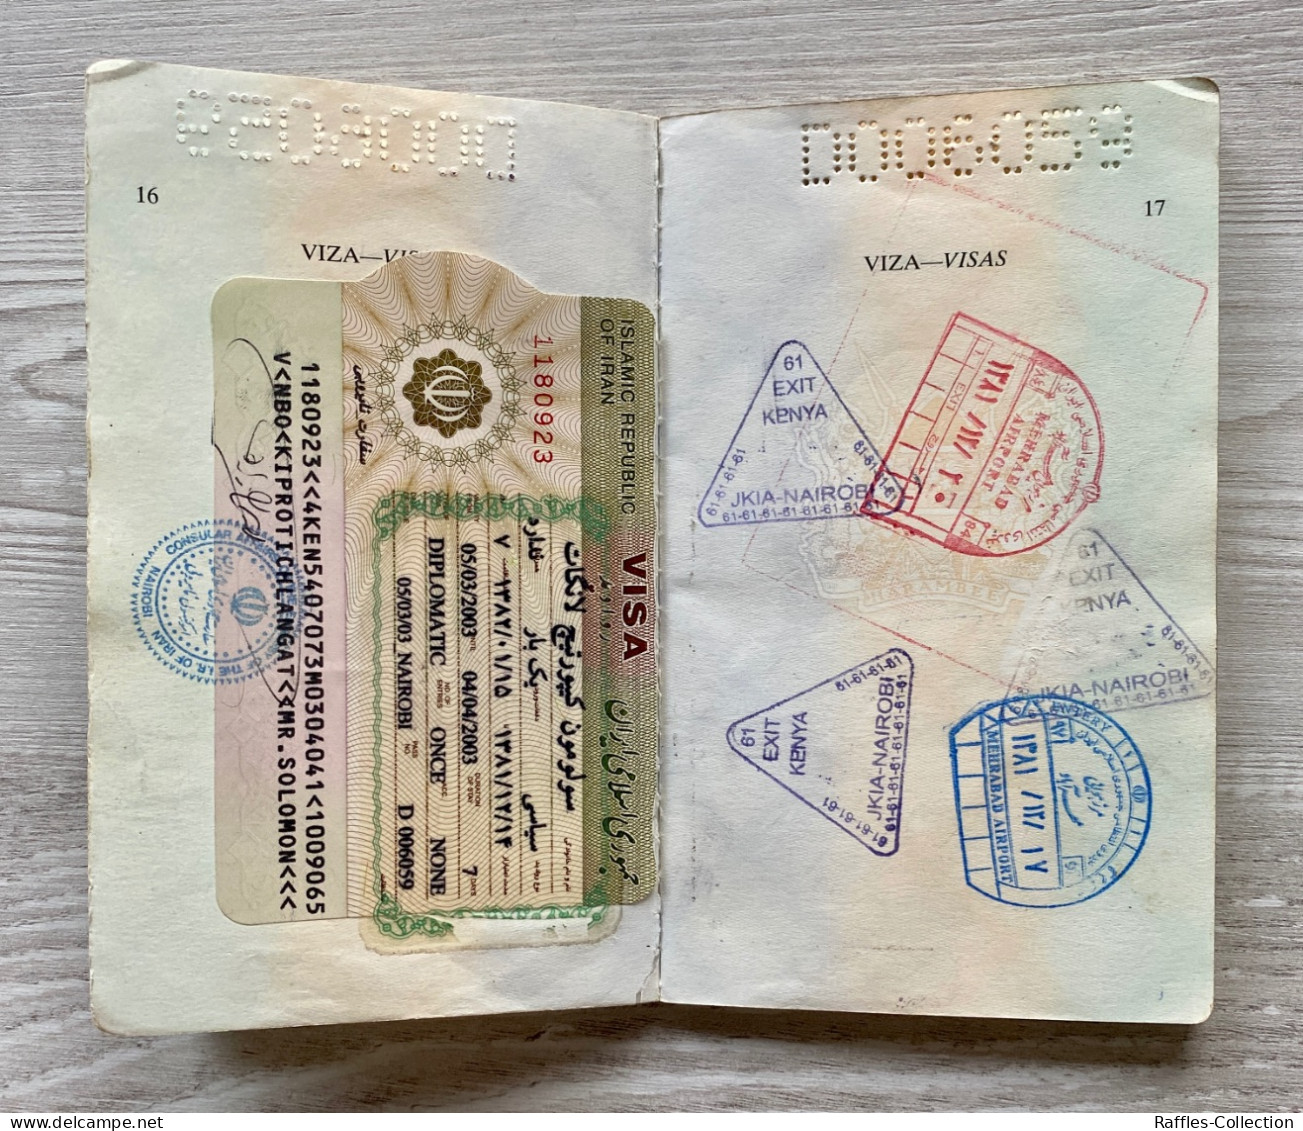 Kenya 1998 diplomatic passport, Ambassador in Australia & New Zealand many visas passeport reisepass